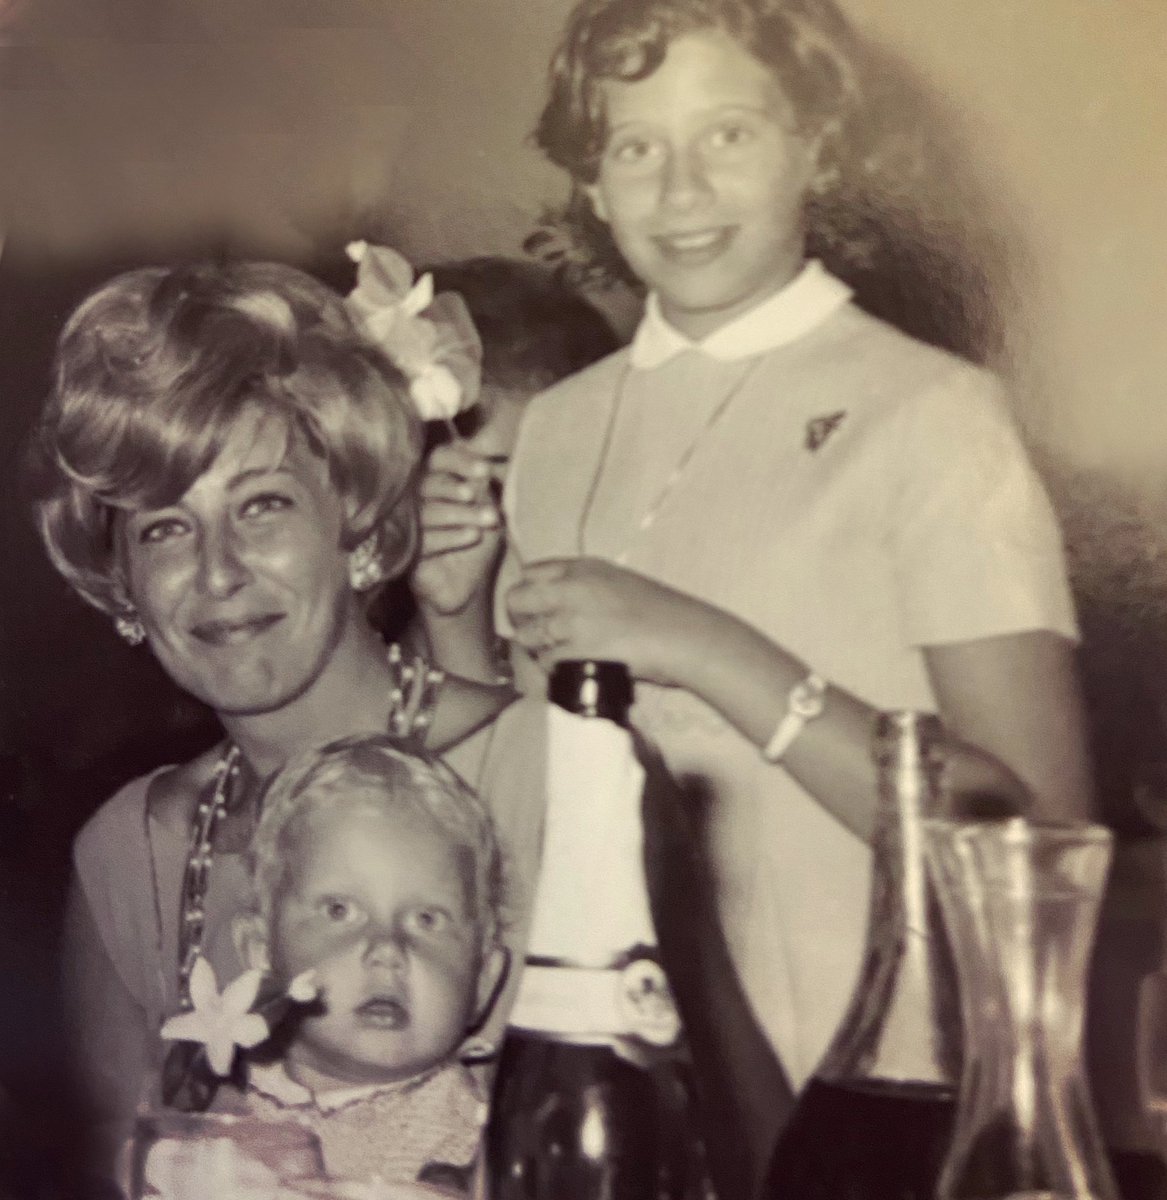 Mama, Sista and I (baby me)
#vintage #familyportrait